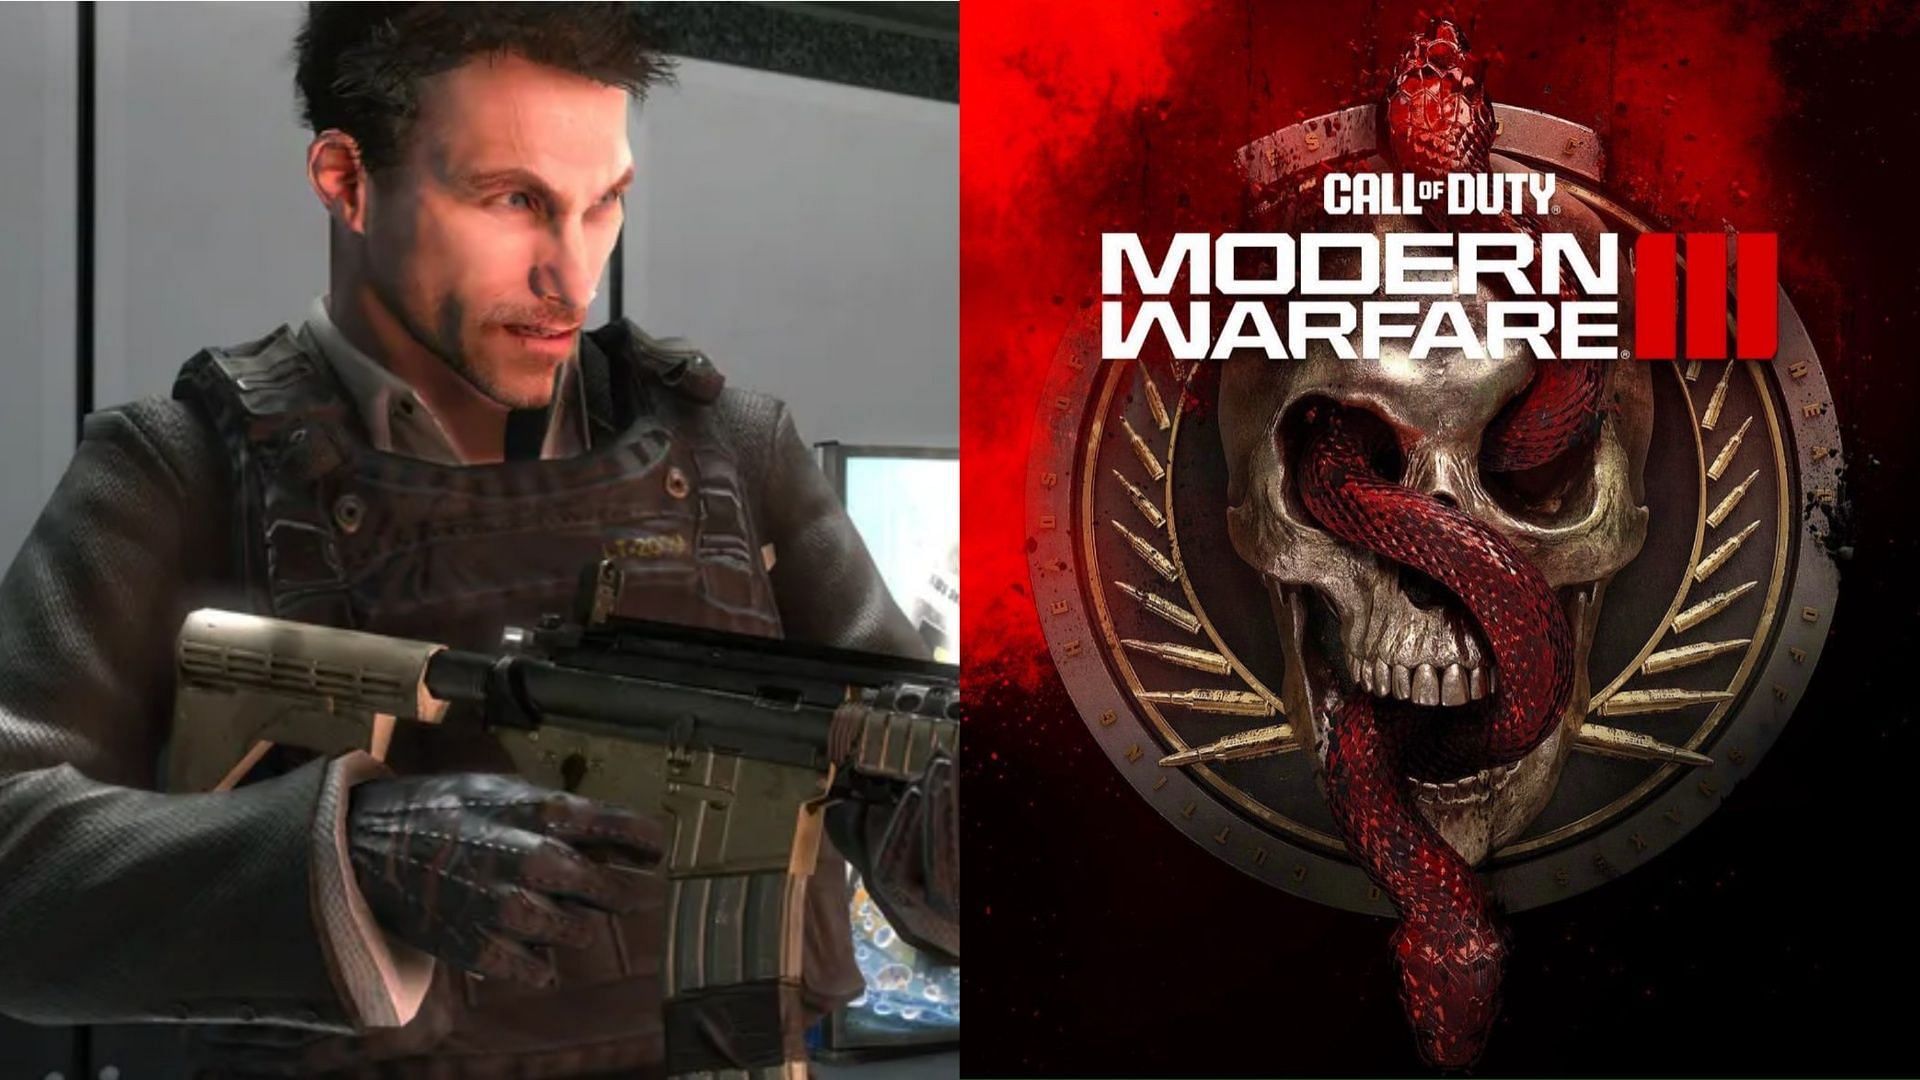 Makarov Modern Warfare 3 Makarov Operator skin revealed ahead of launch